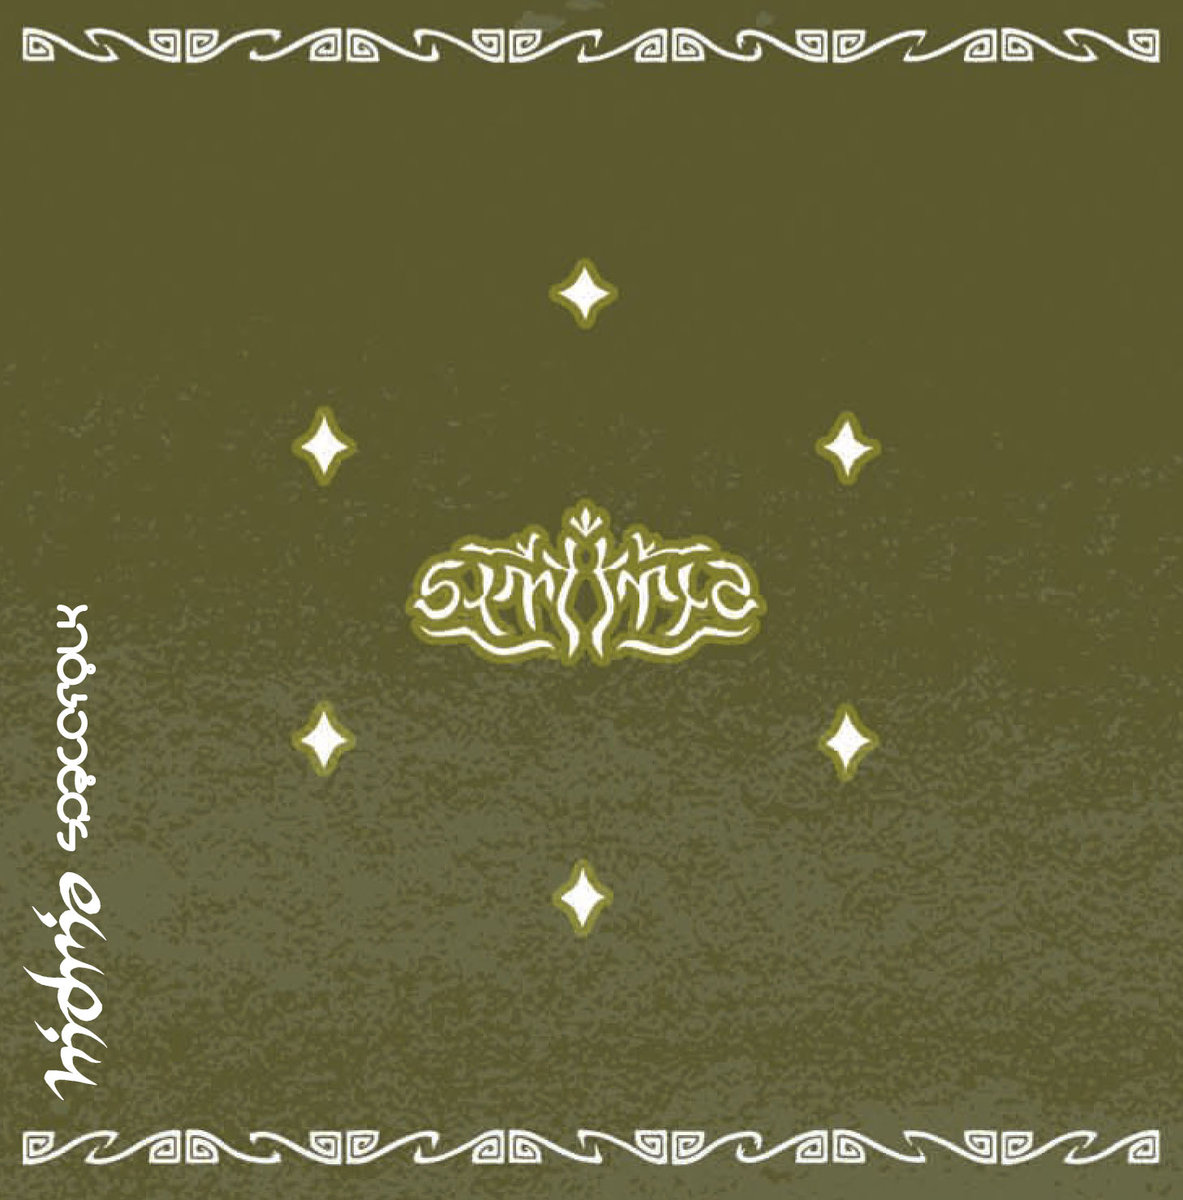 Hidria Spacefolk - Radien @ 'Symetria' album (alternative, astrobeat)